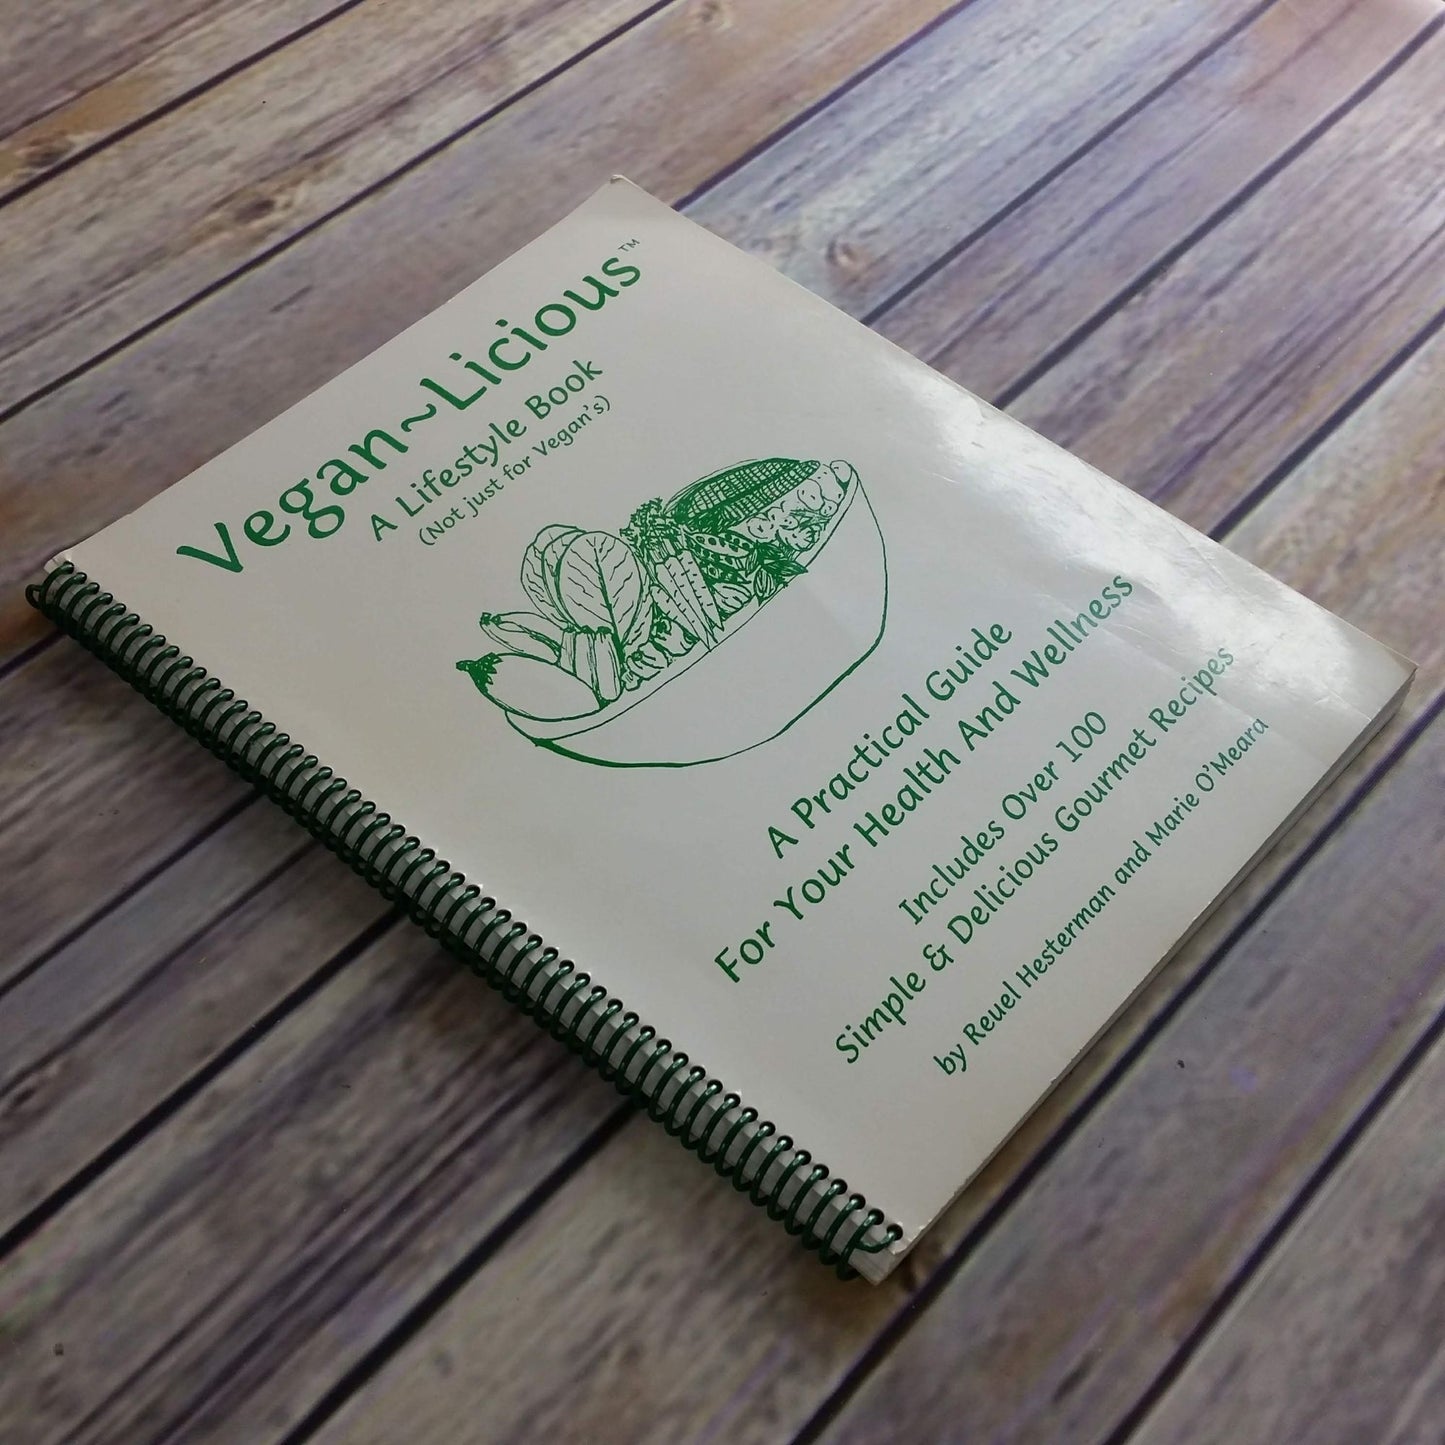 Vintage Vegan Cookbook Vegan-Licious Practical Guide for Your Health and Wellness Over 100 Vegan Recipes Hesterman O'Meara 1996